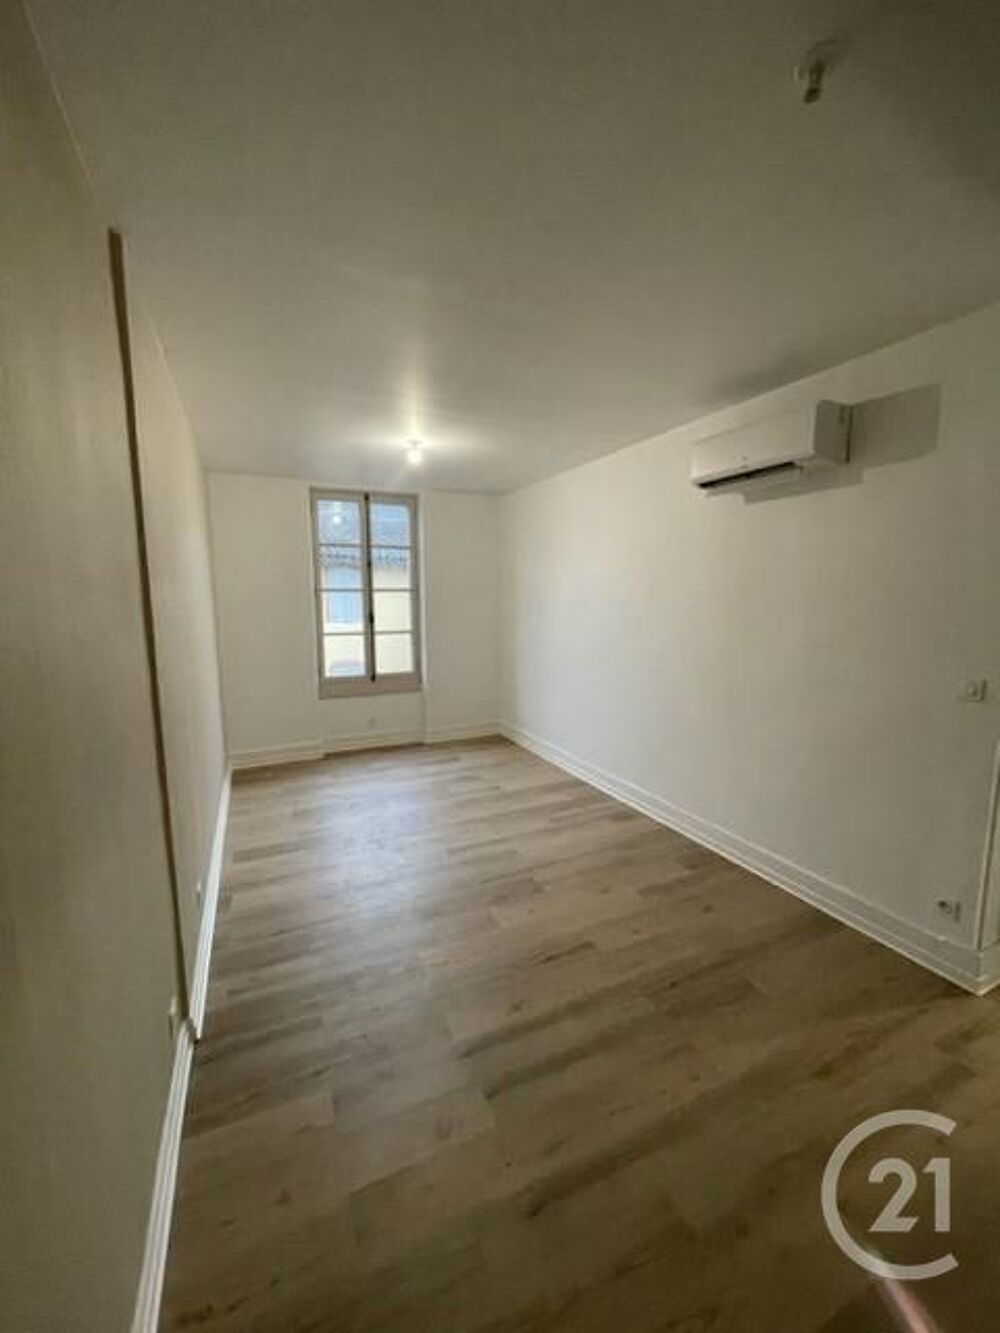 location Appartement - 1 pice(s) - 27 m Montauban (82000)